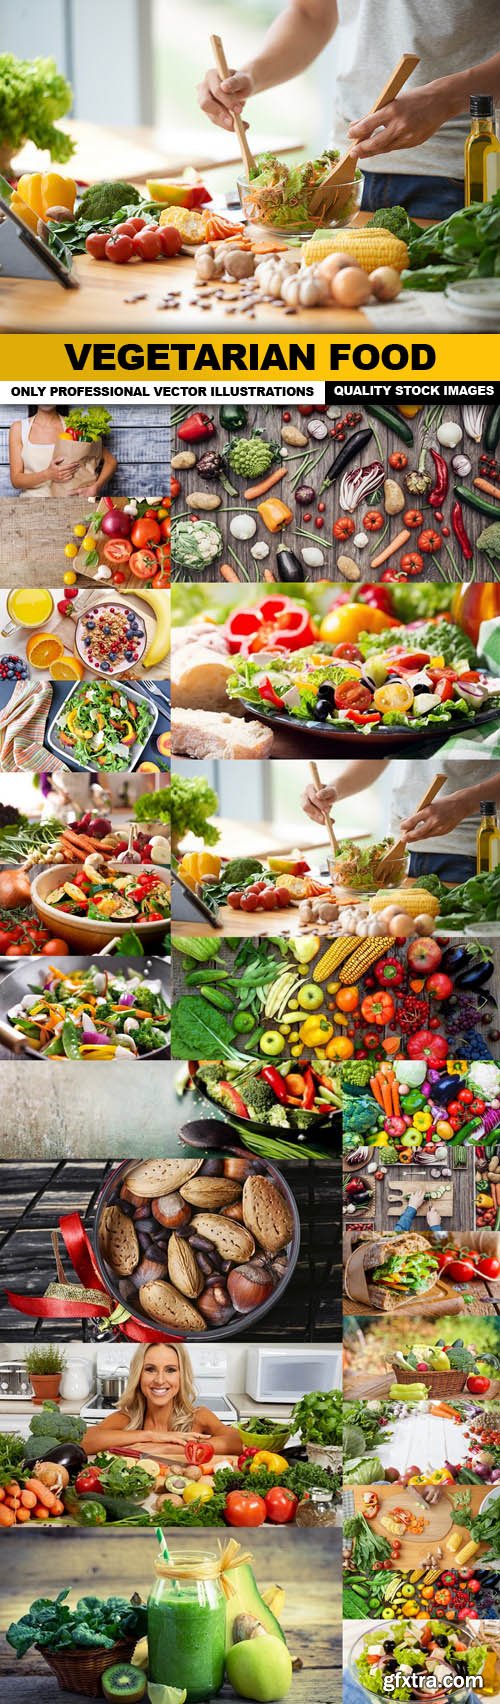 Vegetarian Food - 25 HQ Images